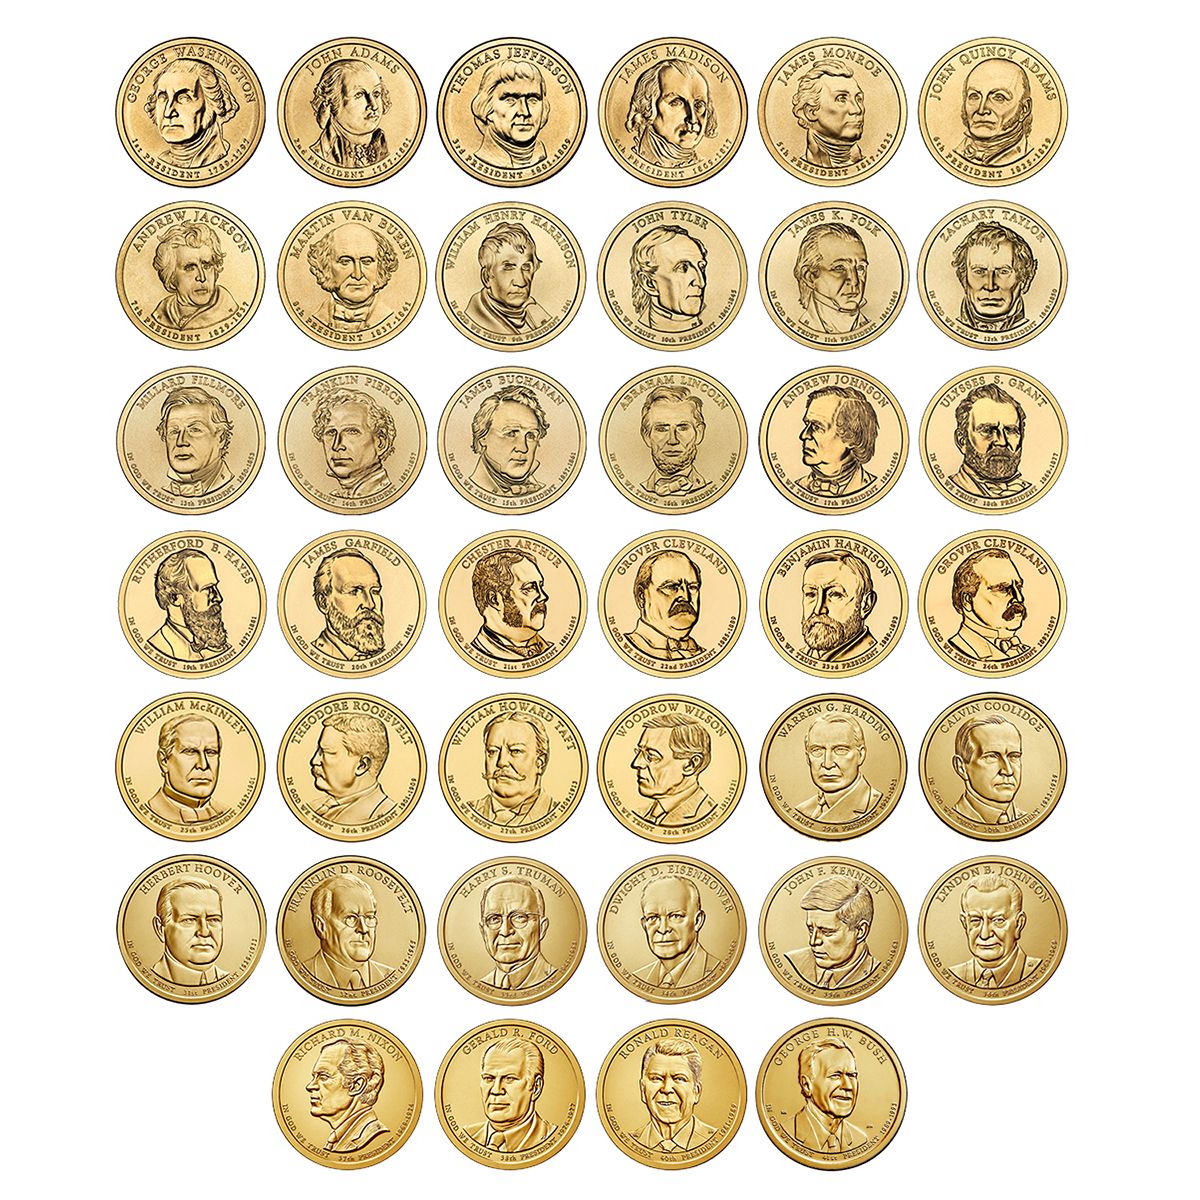 4 Coin Set 2014 All P Warren G Harding Presidential Golden Dollar BU Gold $1 